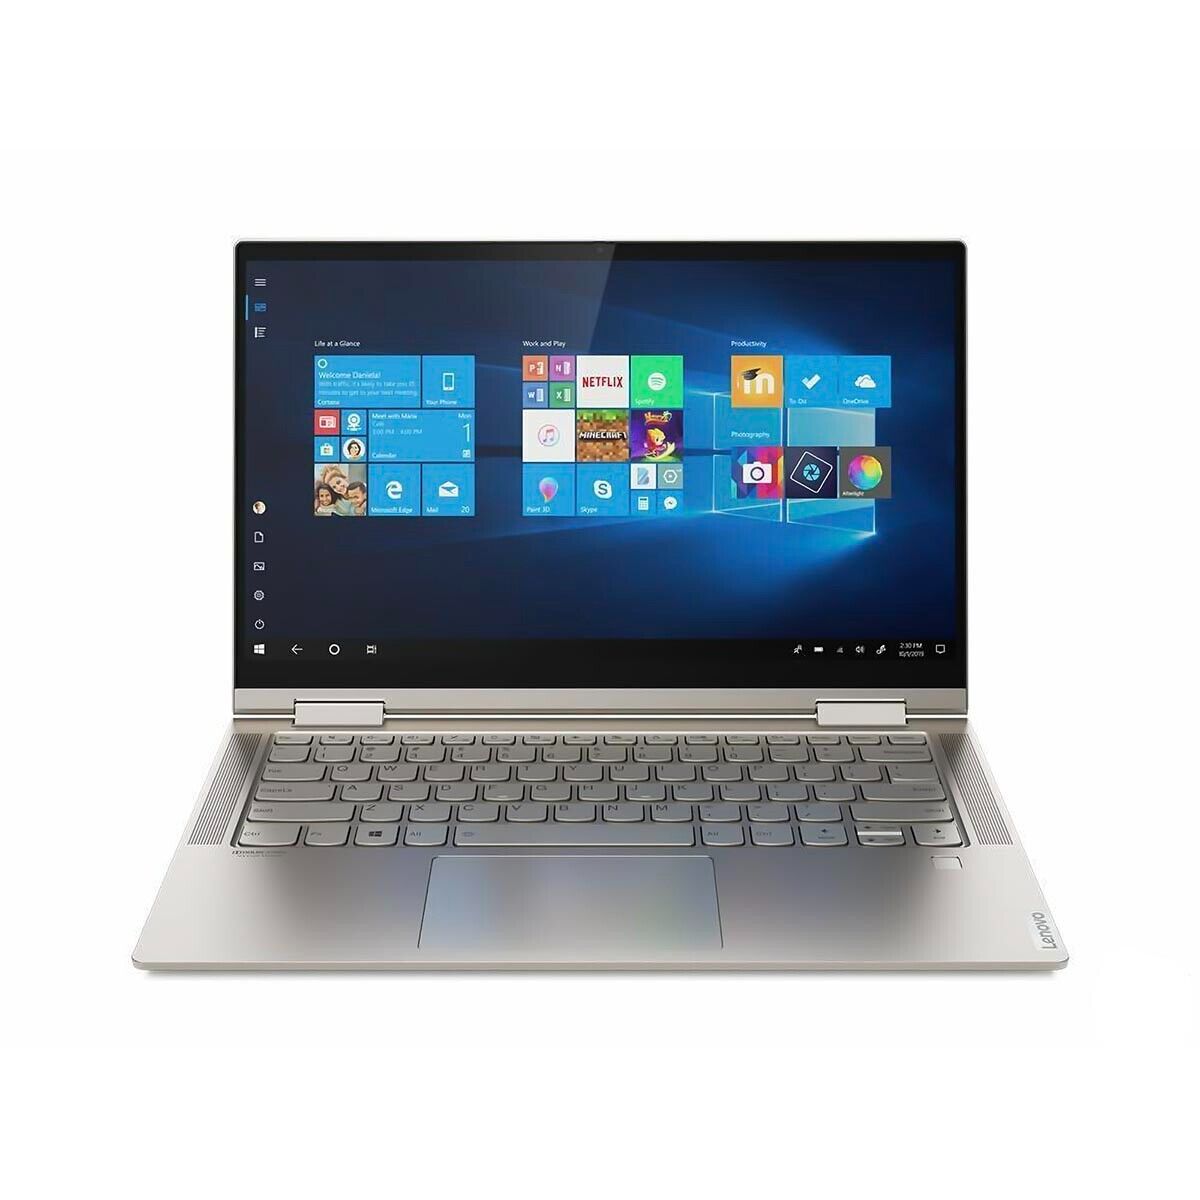 Lenovo Yoga Touchscreen Laptop C740-14IML 14